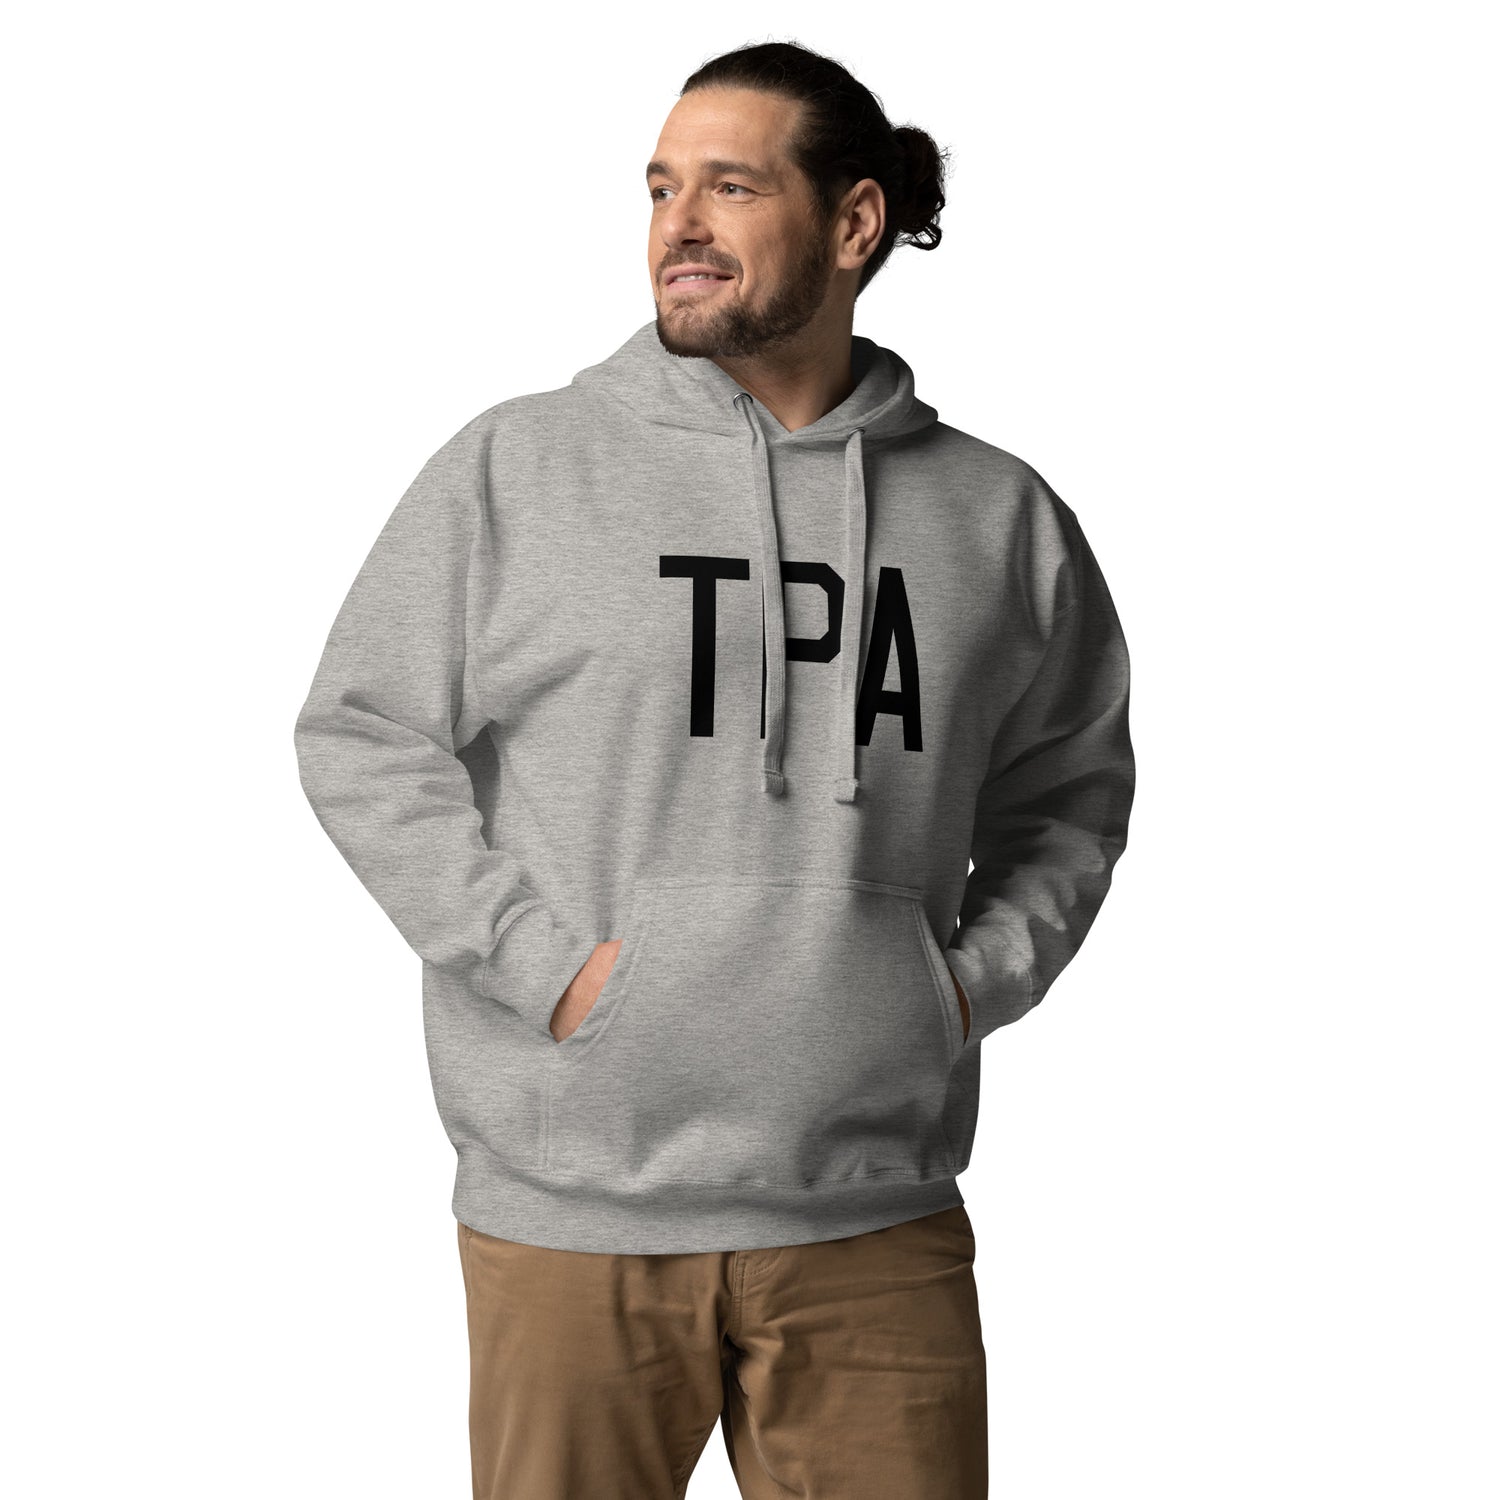 Tampa Florida Hoodies and Sweatshirts • TPA Airport Code